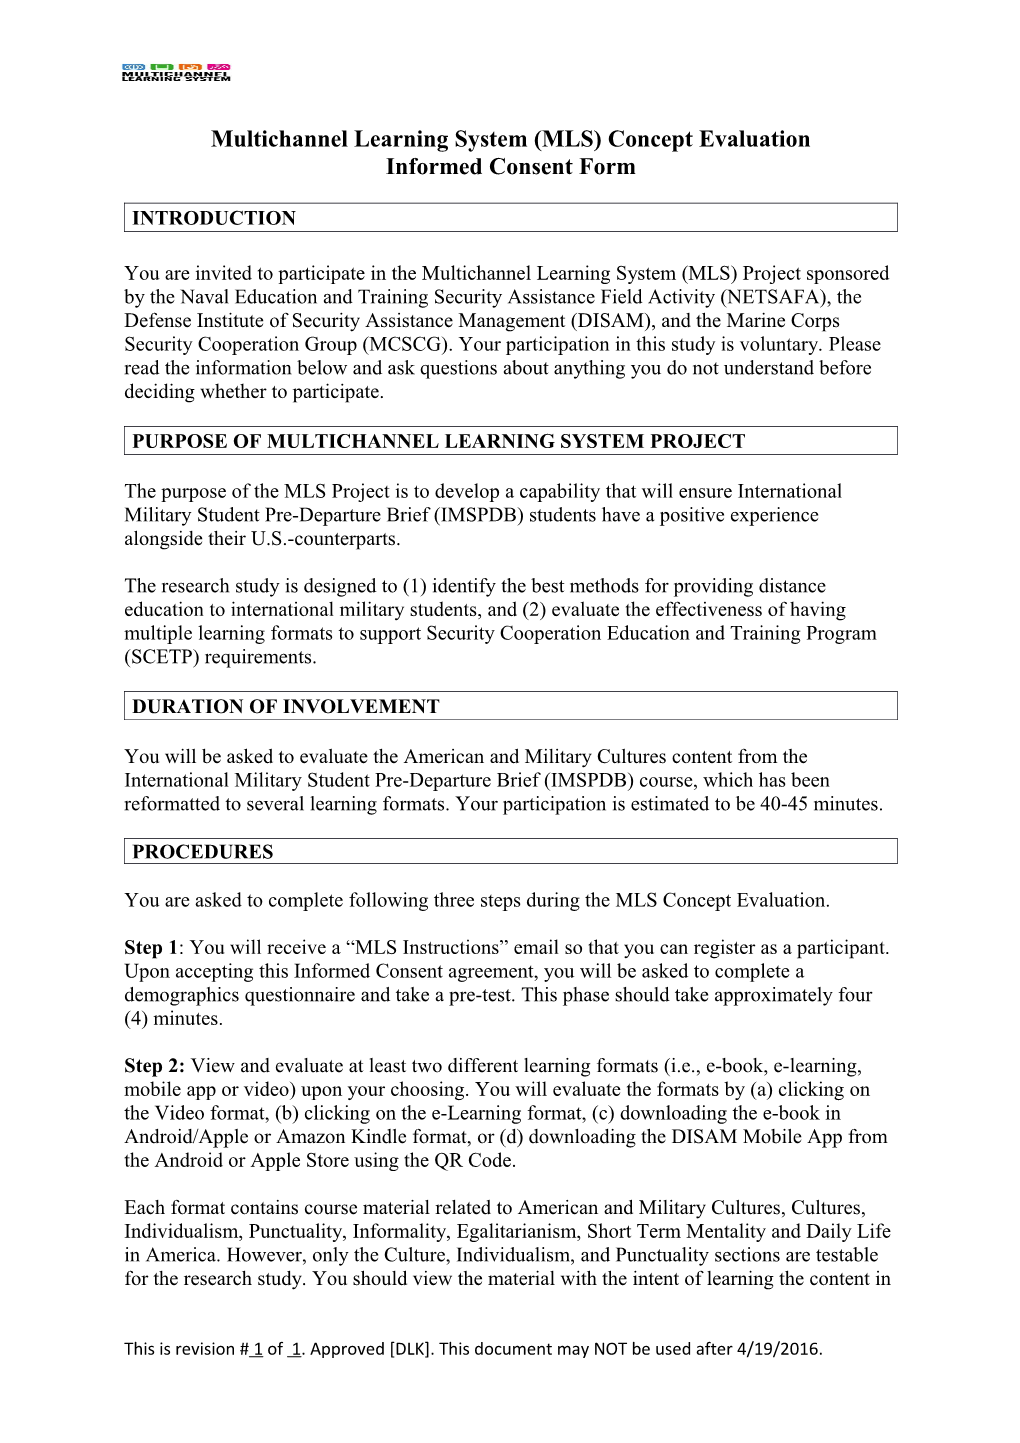 MLS Evaluation Informed Consent